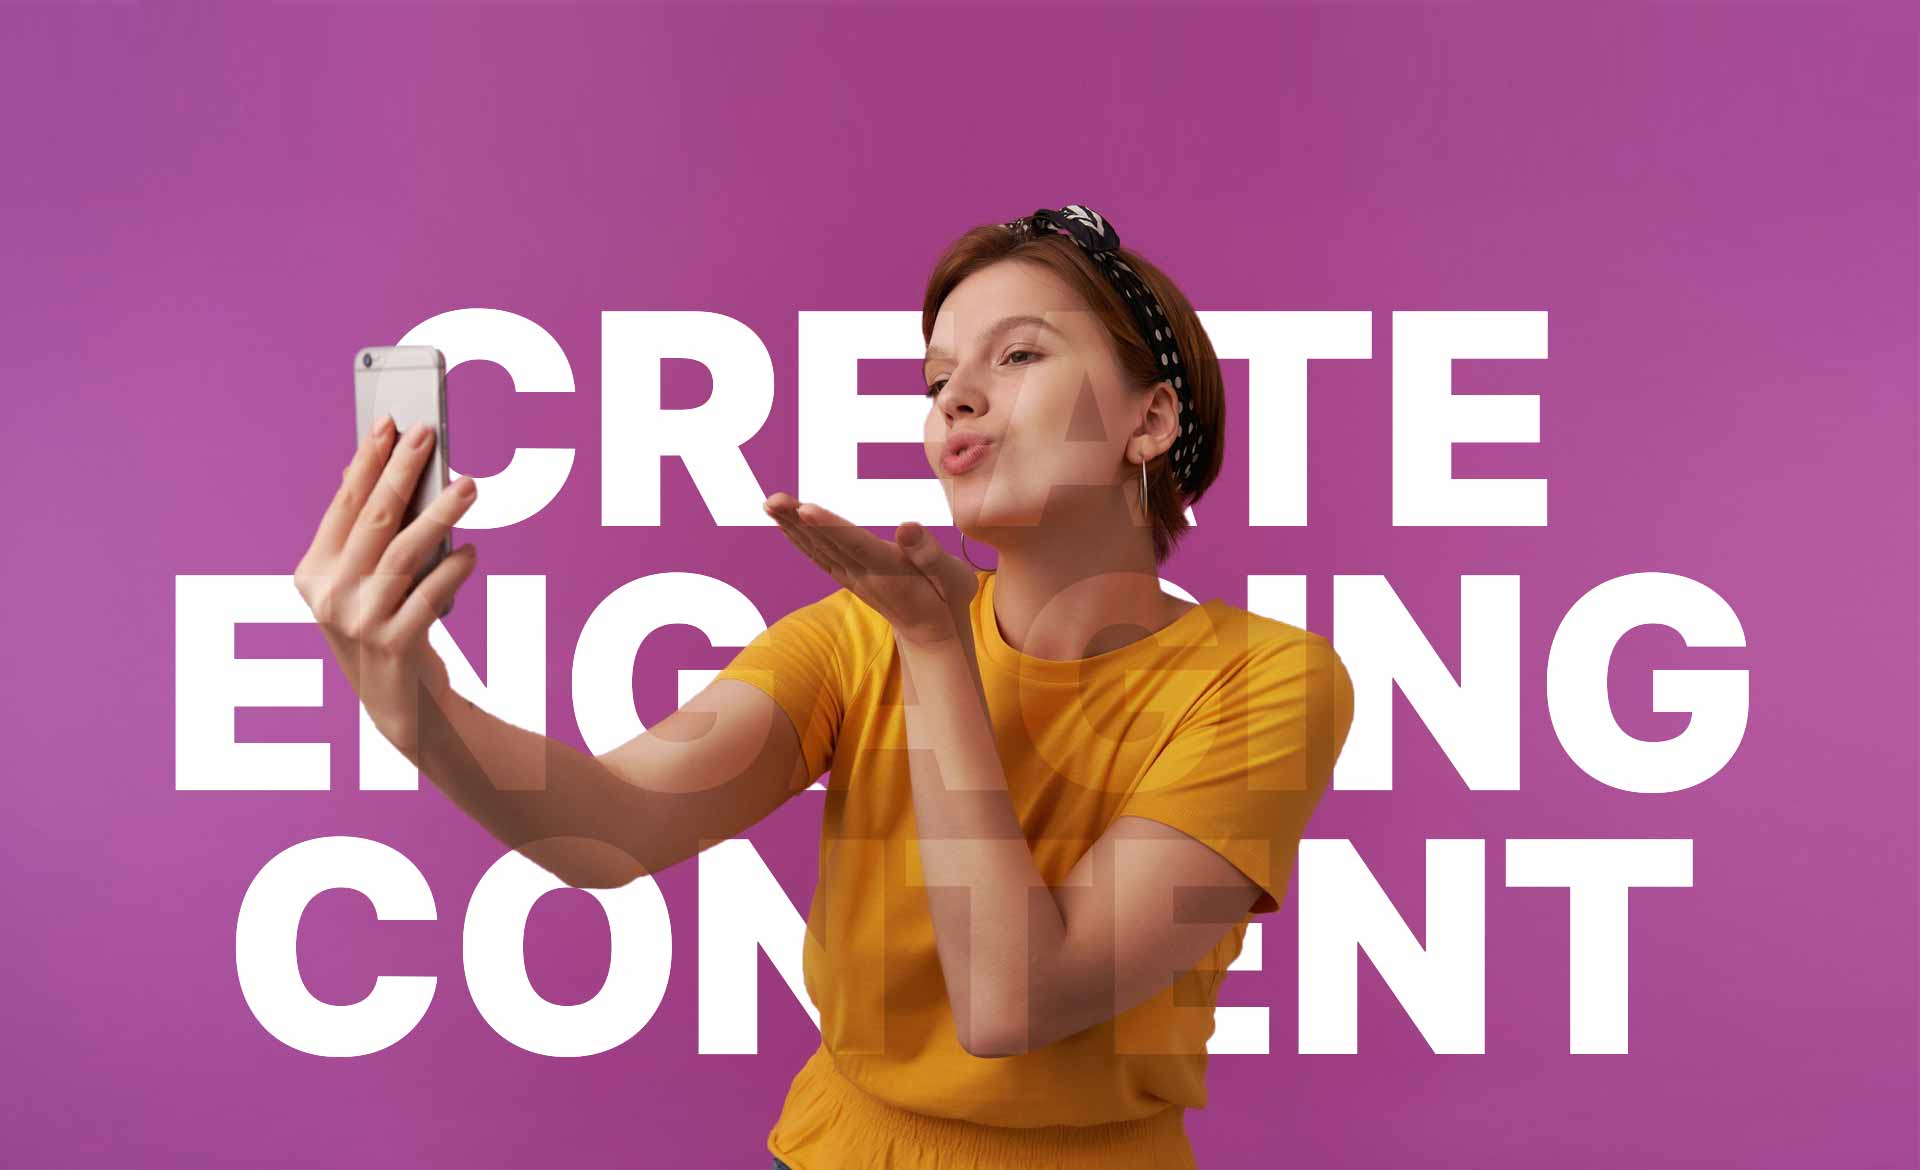 [15.51, 8/3/2023] Andika Pradana Putra: how to create engaging content on social media [15.53, 8/3/2023] Salma Heaptalk: a woman uses her phone to create engaging content on social media